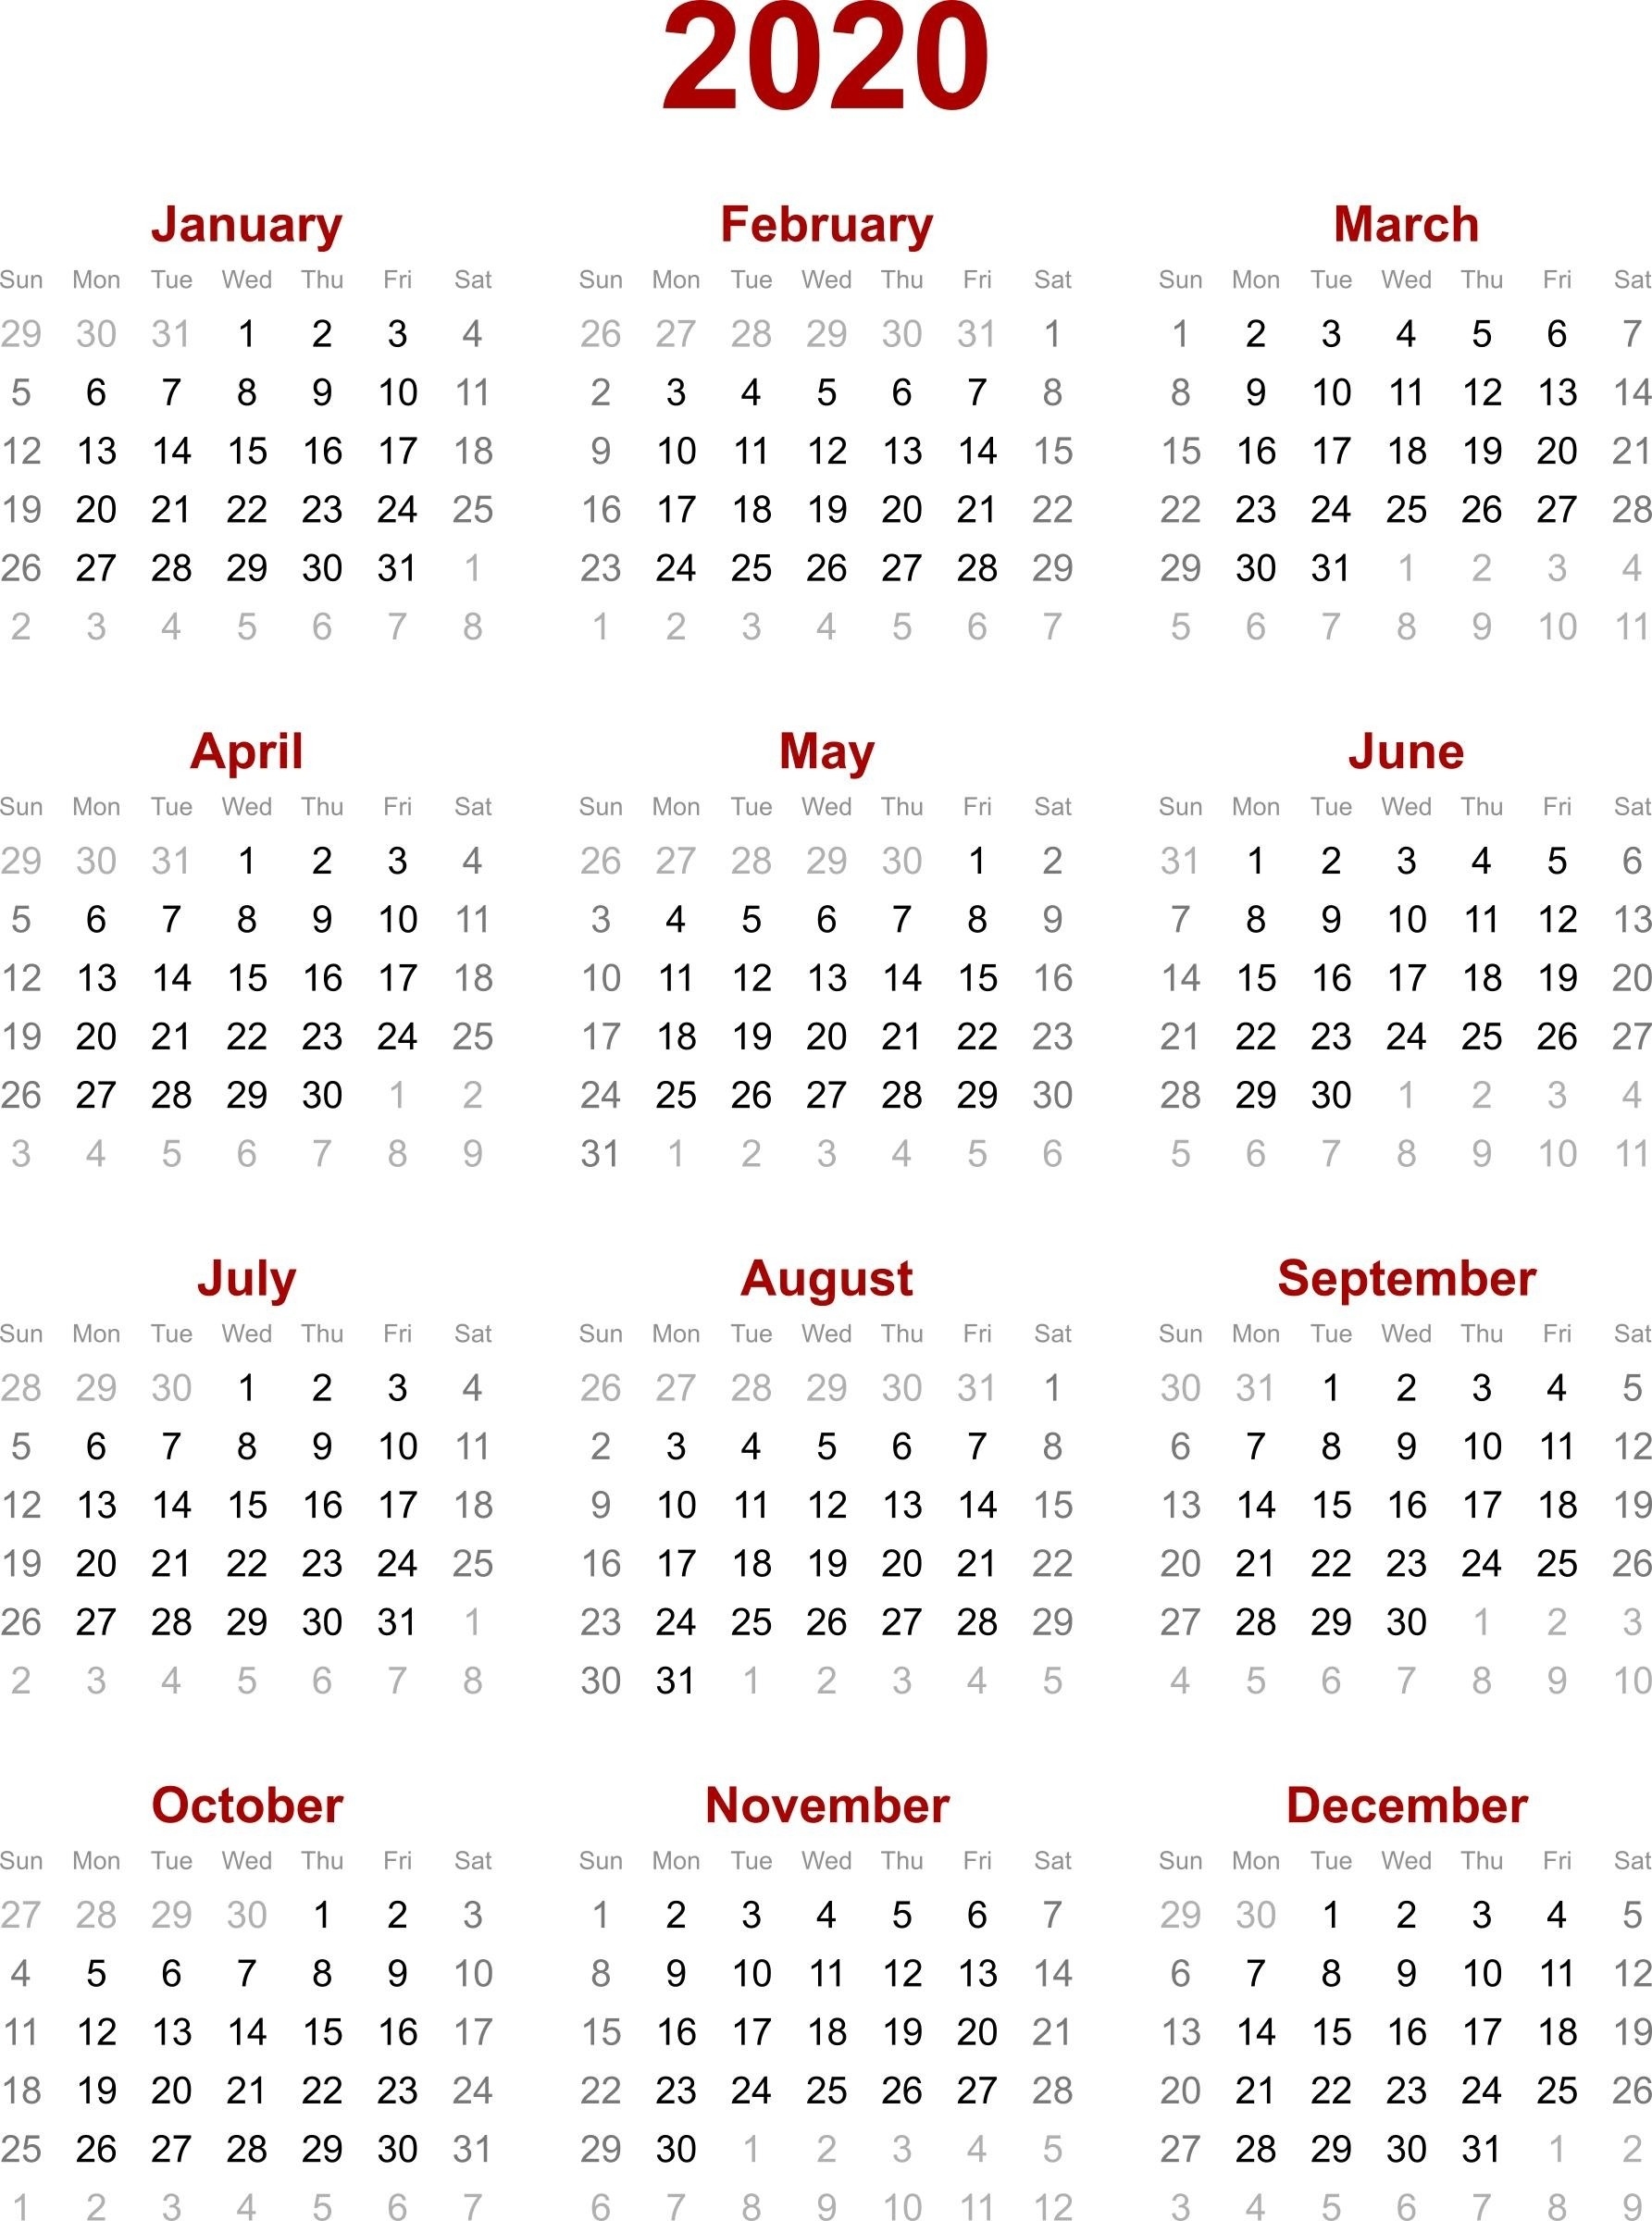 Remarkable 2020 Calendar Singapore Holiday • Printable Blank-Singapore 2020 Calendar With Holidays